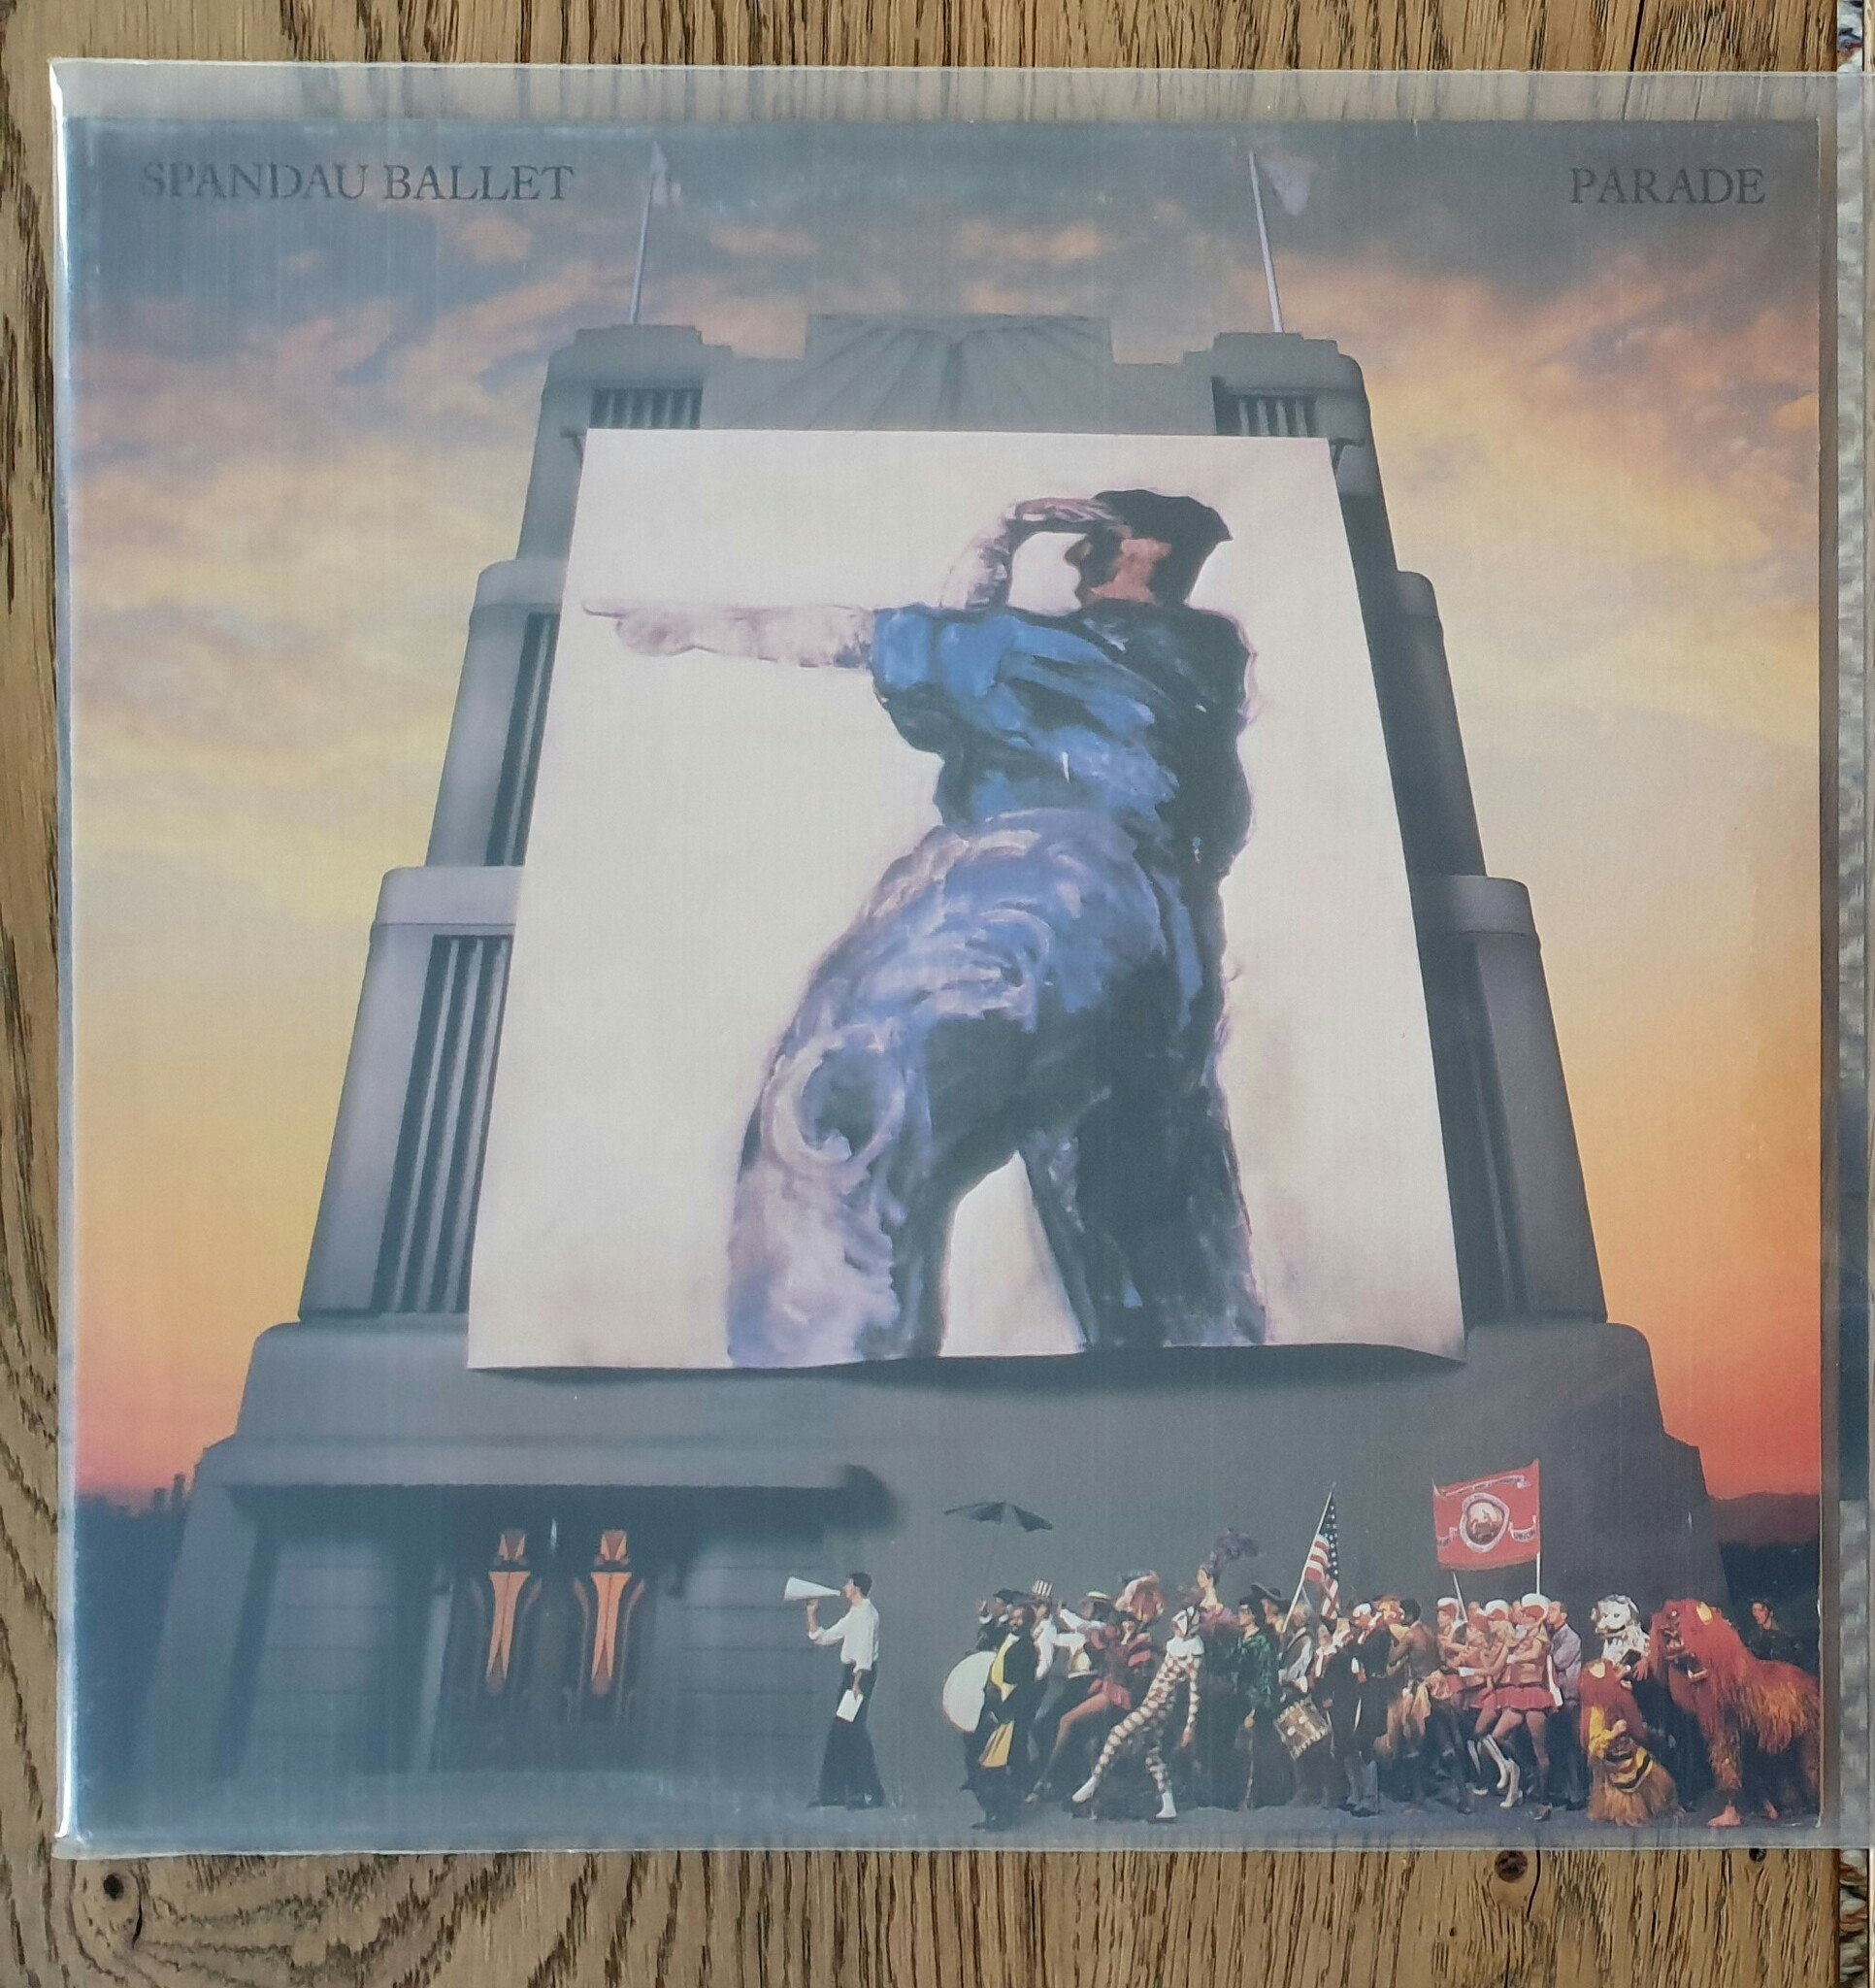 Spandau Ballet, Parade. Vinyl LP